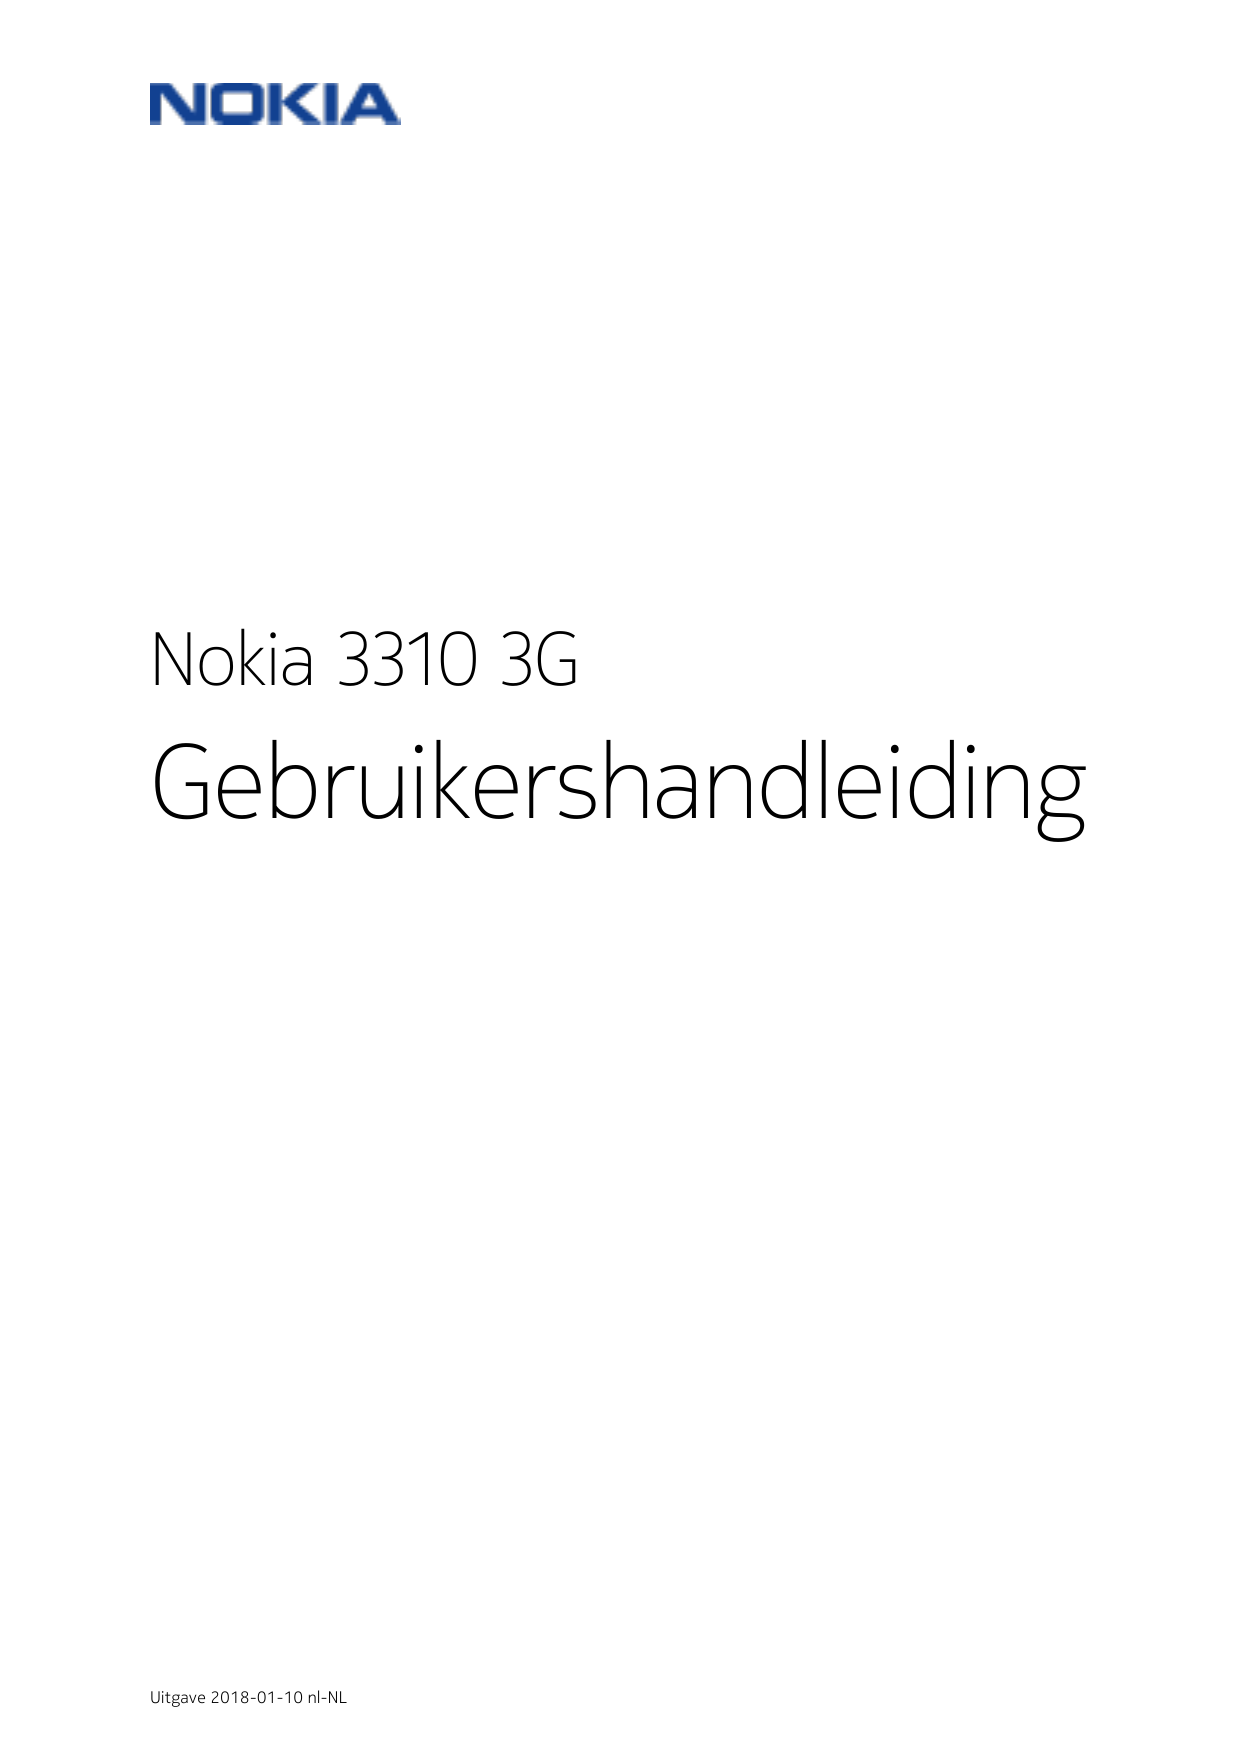 Nokia 3310 3GGebruikershandleidingUitgave 2018-01-10 nl-NL